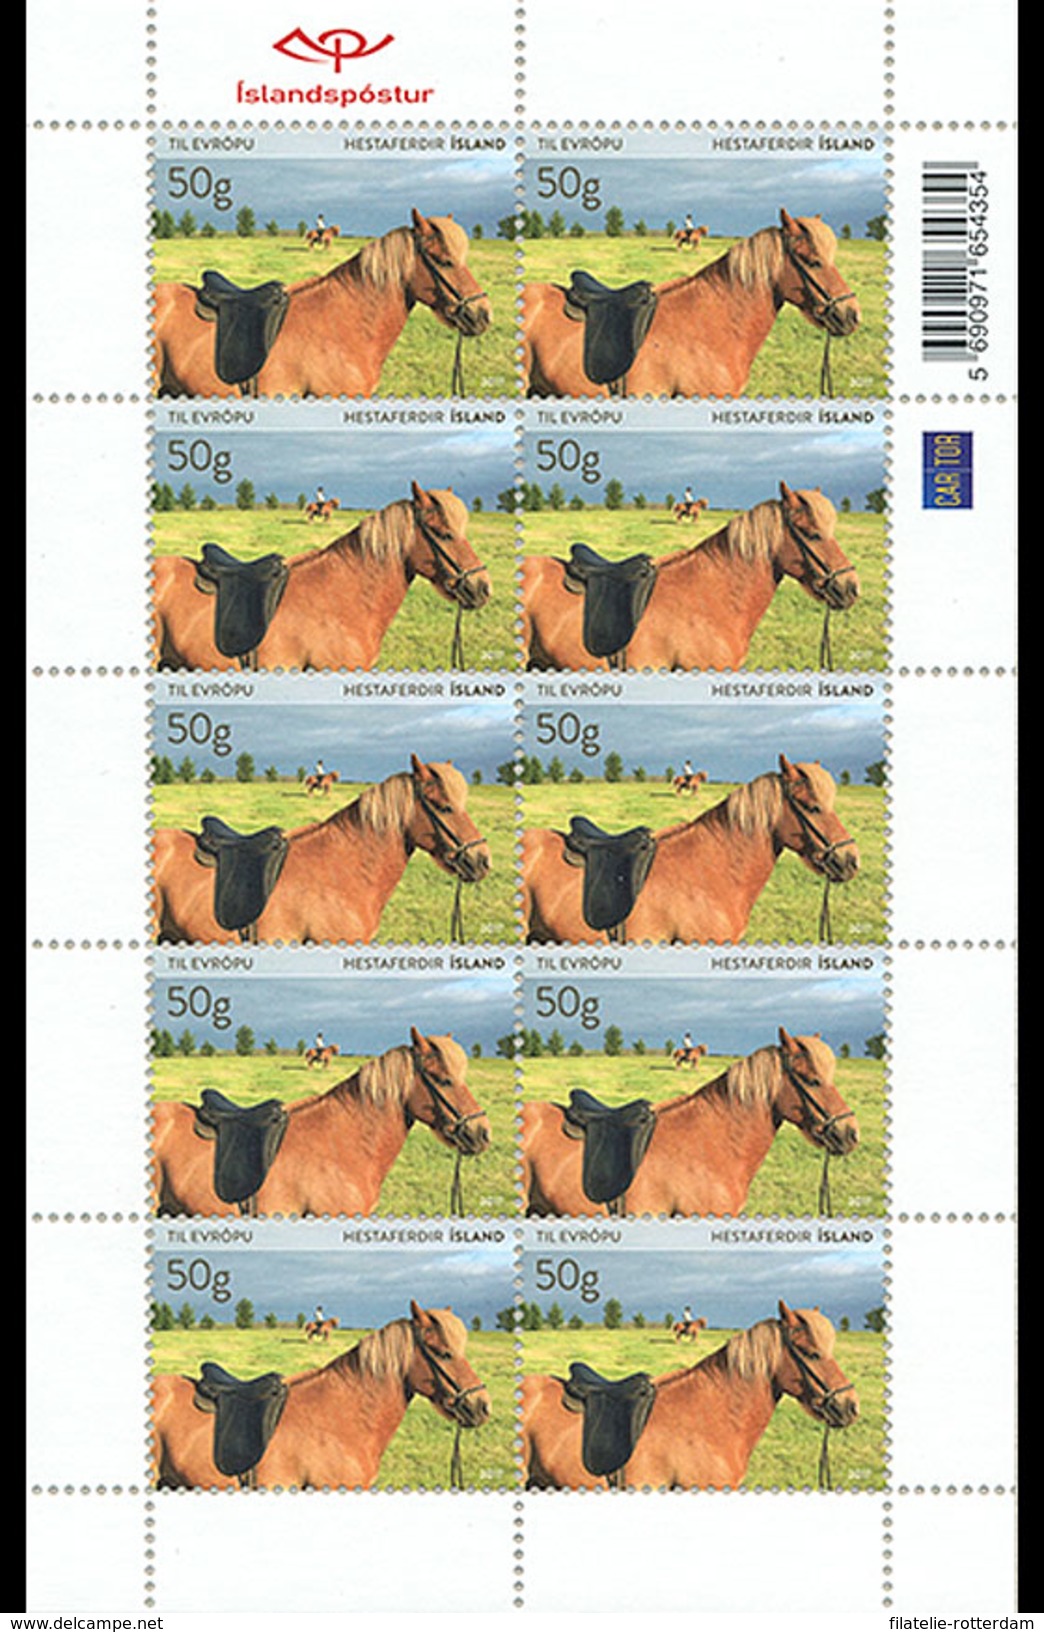 IJsland / Iceland - Postfris / MNH - Sheet Toerisme 2017 - Unused Stamps